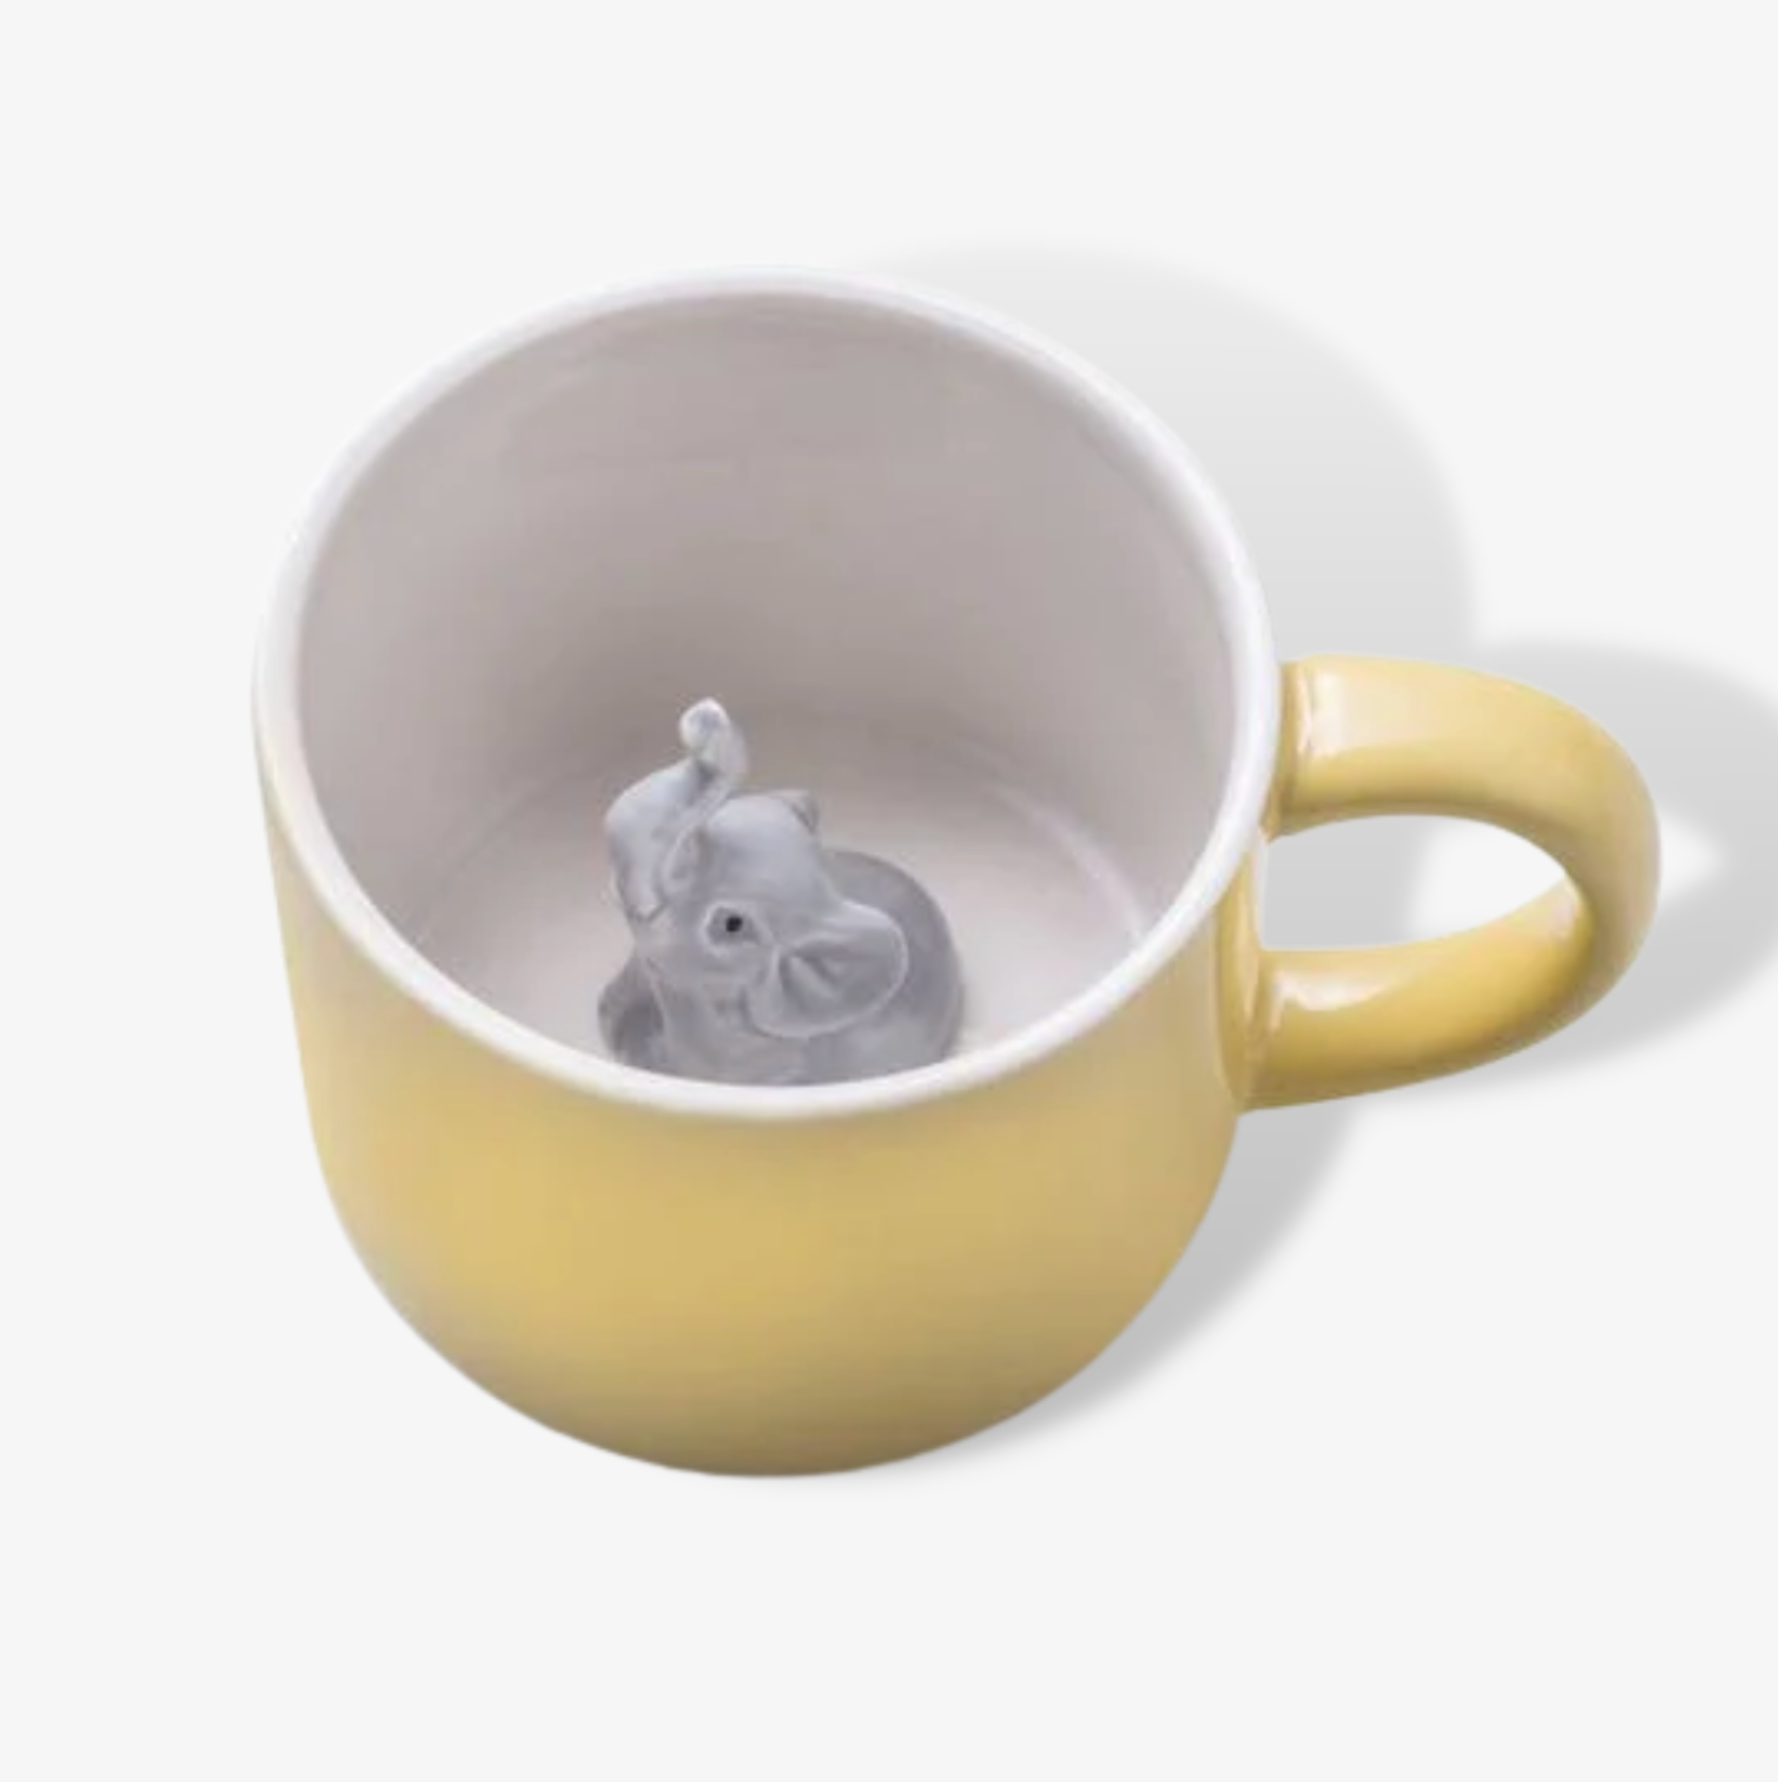 Surprise Hidden Ceramic Elephant Mug